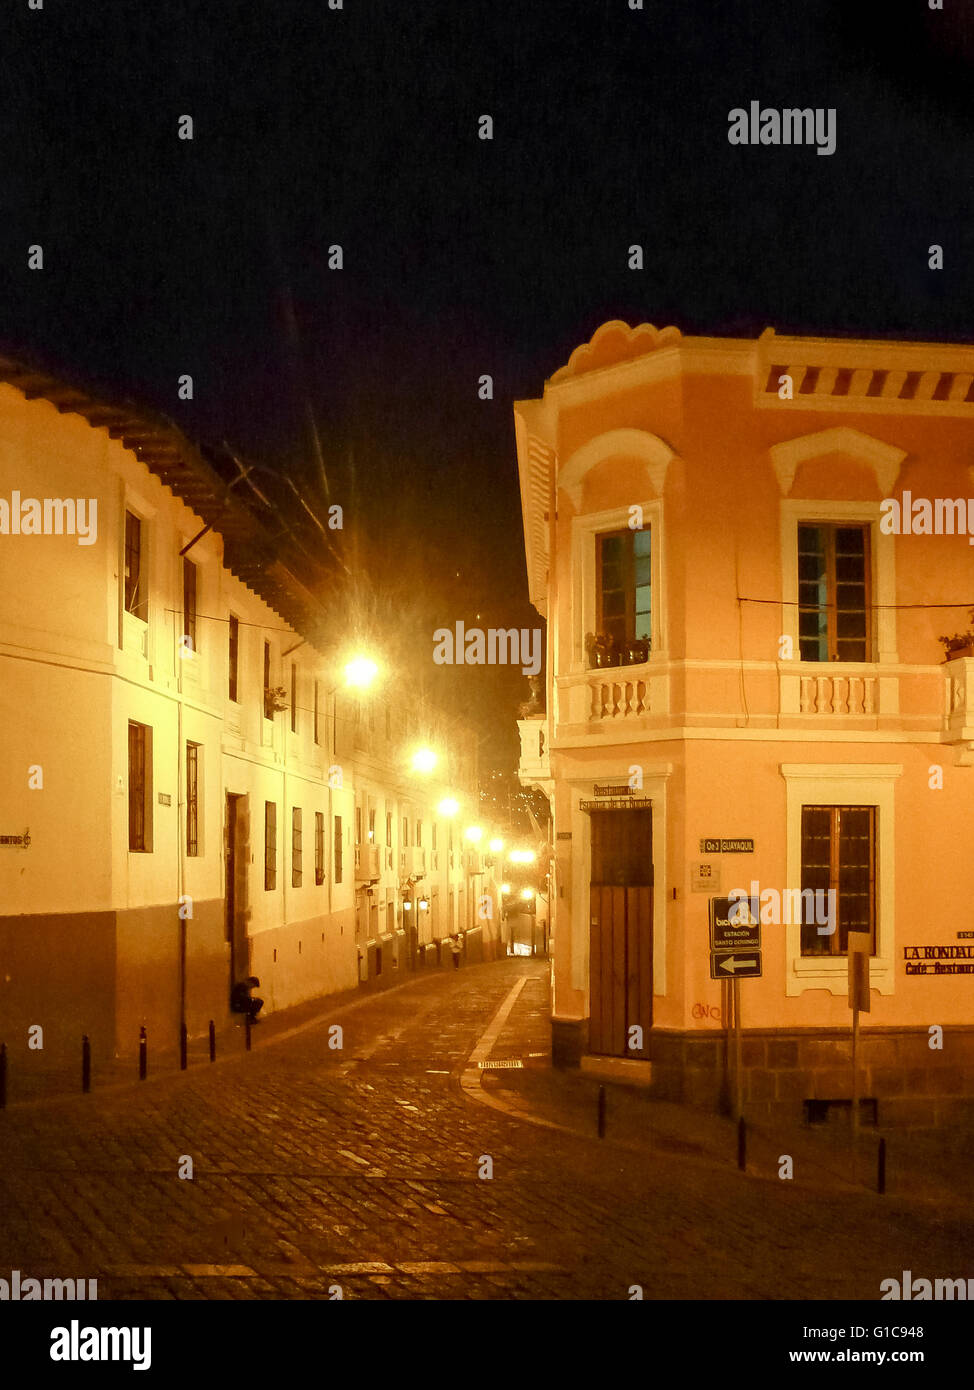 QUITO, ECUADOR, OCTOBER - 2015 - Night urban scene of La Ronda, a traditional colonial style street located in the historic cent Stock Photo